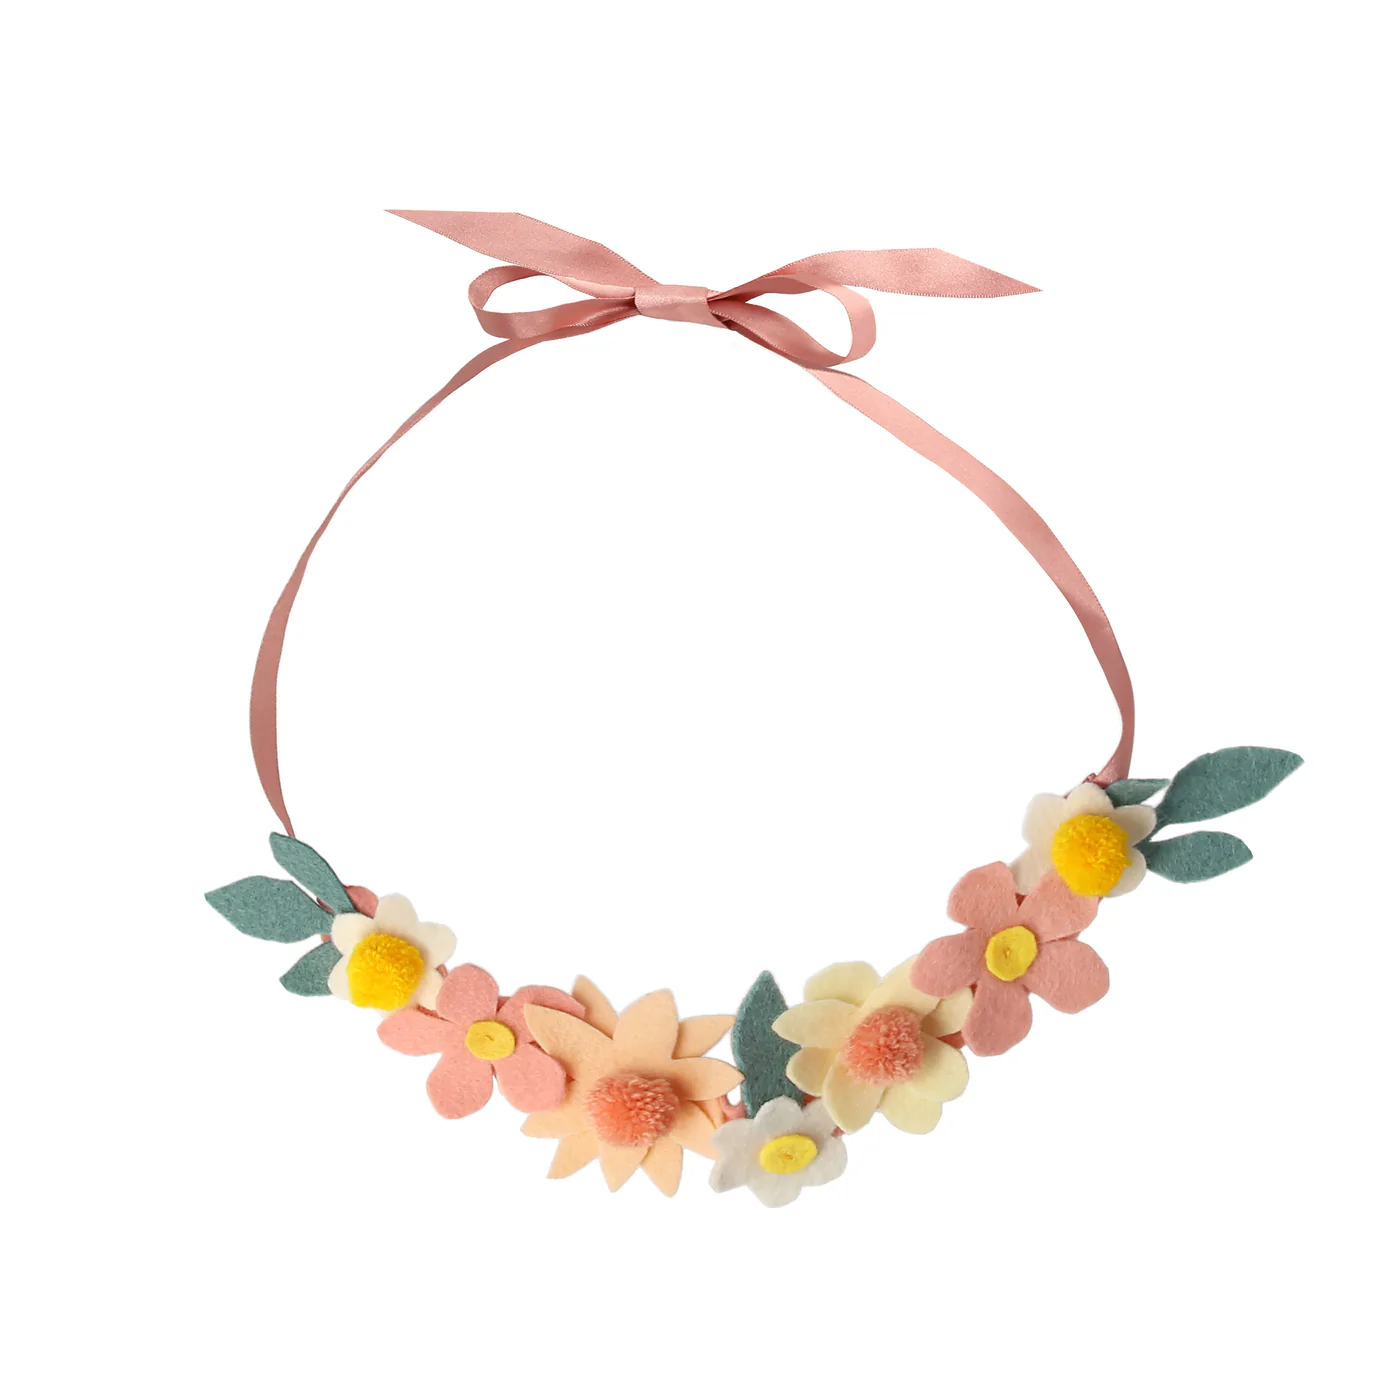 Kit creativ pentru cusut - Flower Crown - Meri Meri